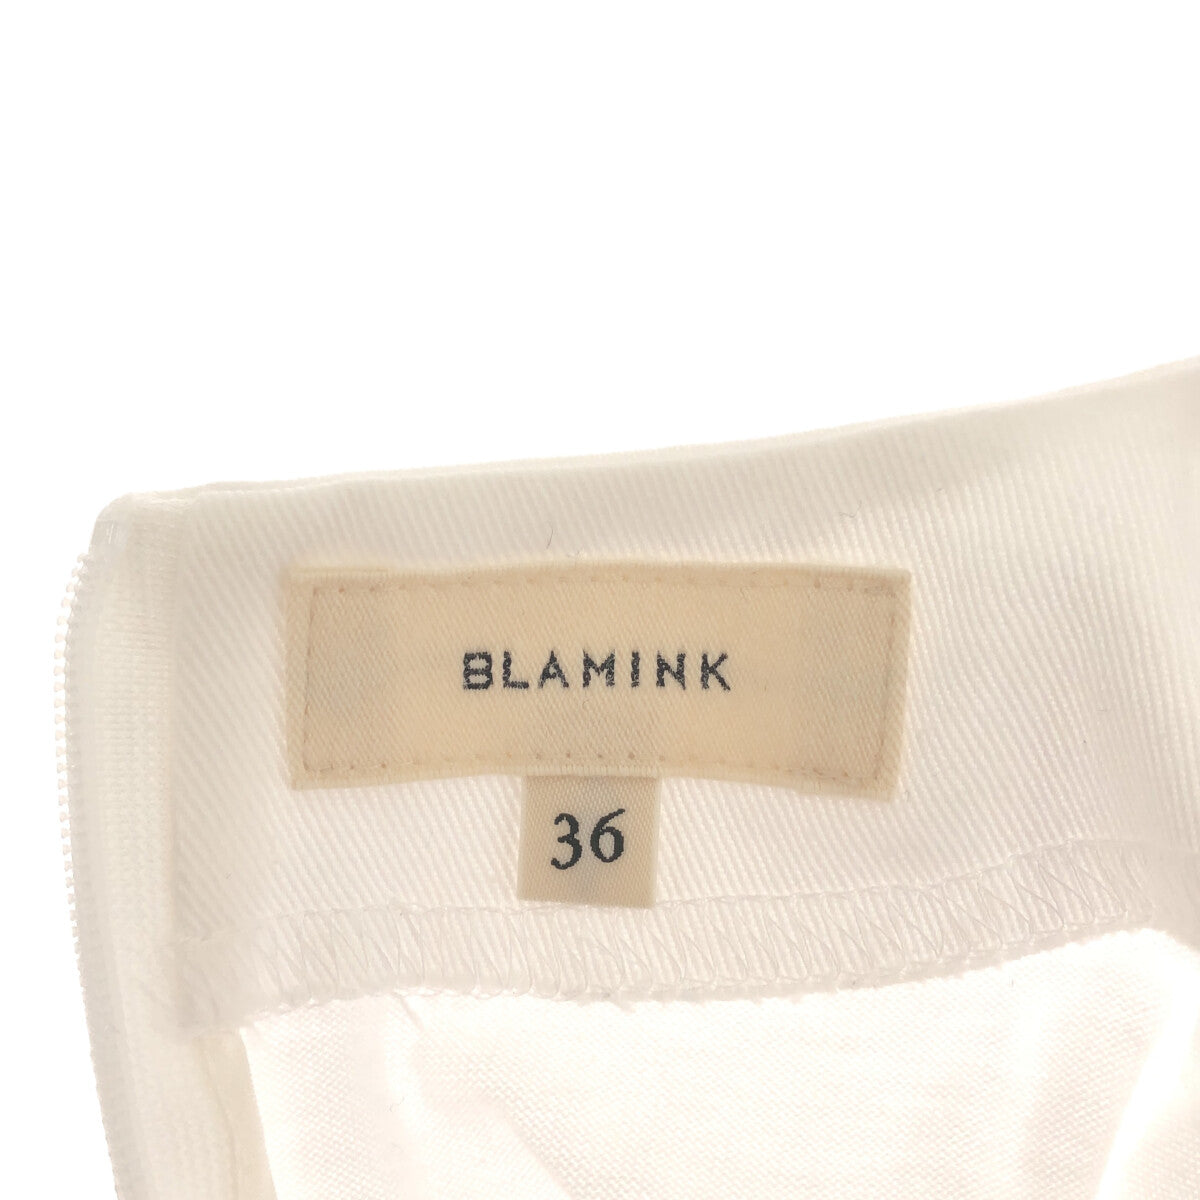 BLAMINK / ブラミンク | クルーネックギャザーショートスリーブ トップス | 36 |